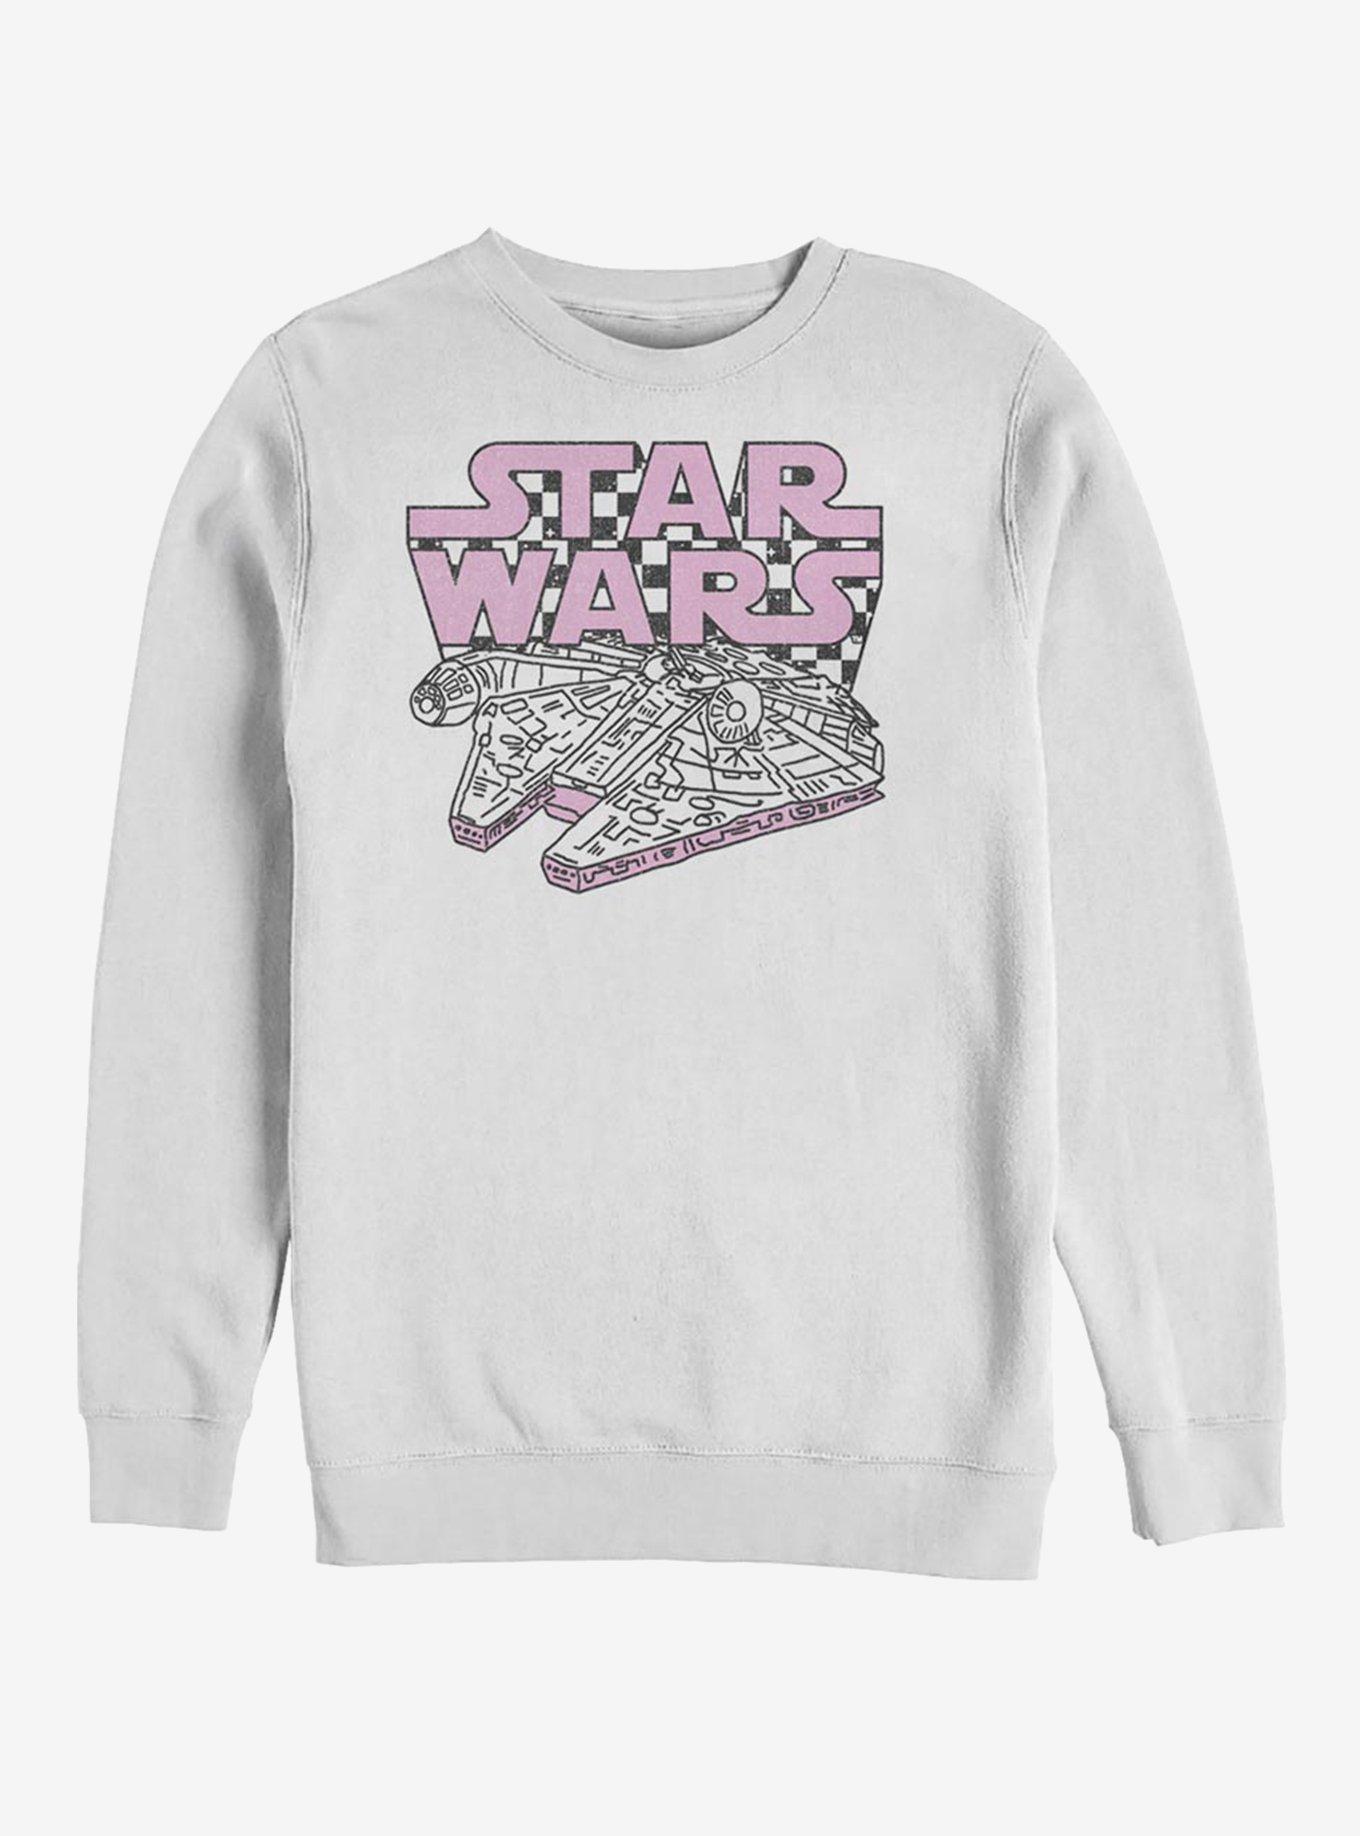 Star Wars Checker Falcon 2 Sweatshirt, WHITE, hi-res